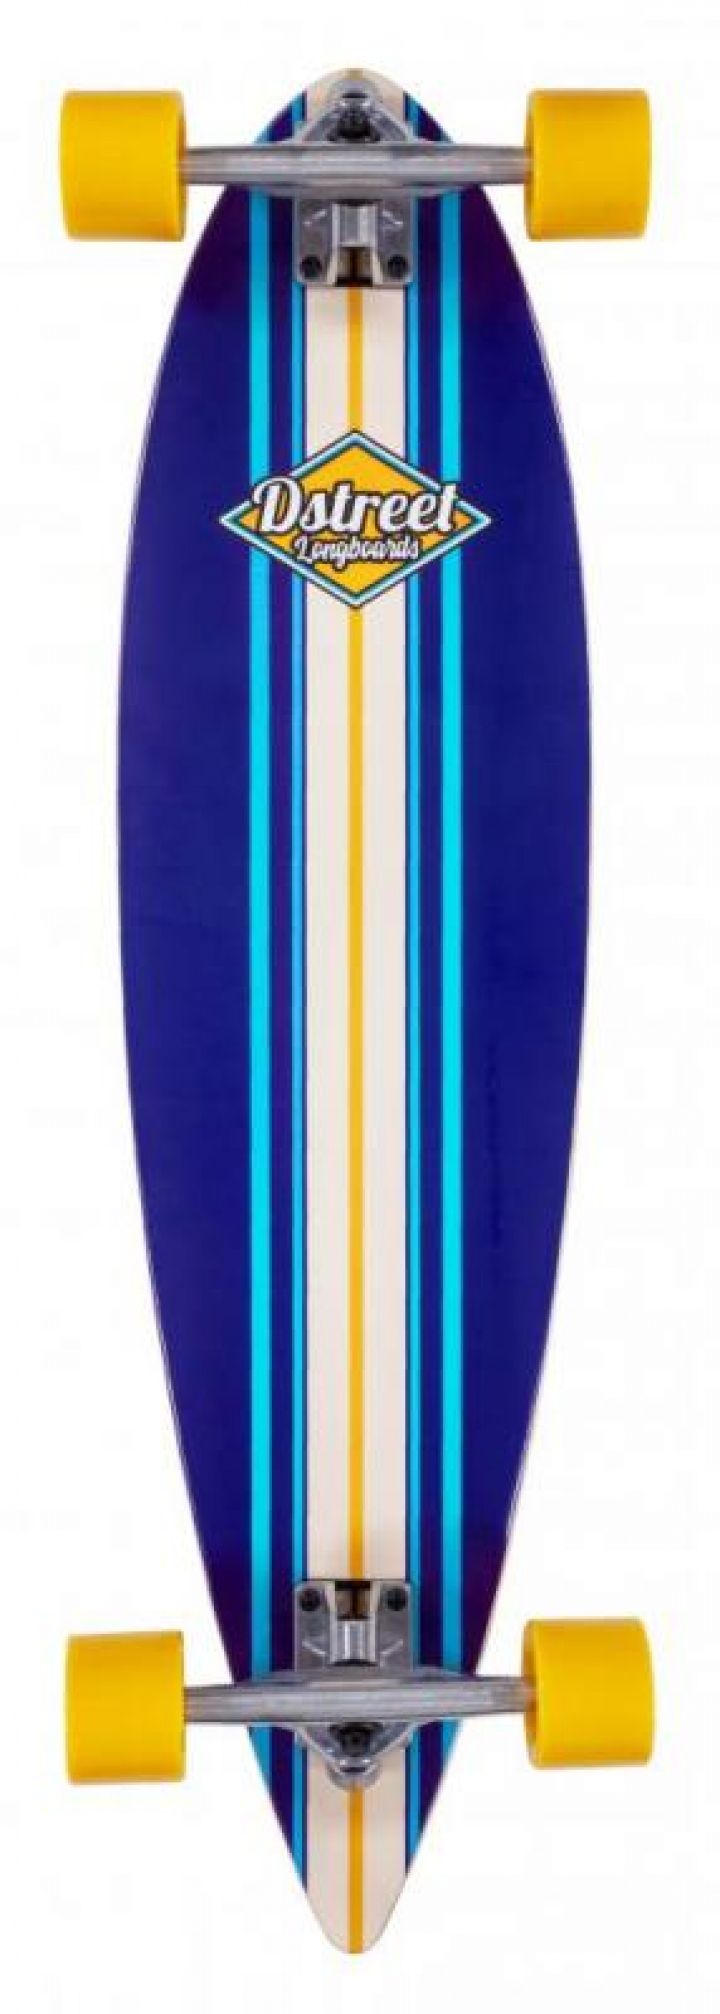 Skate D Street Pintail Ocean Blue Size: 35 x 9 IN